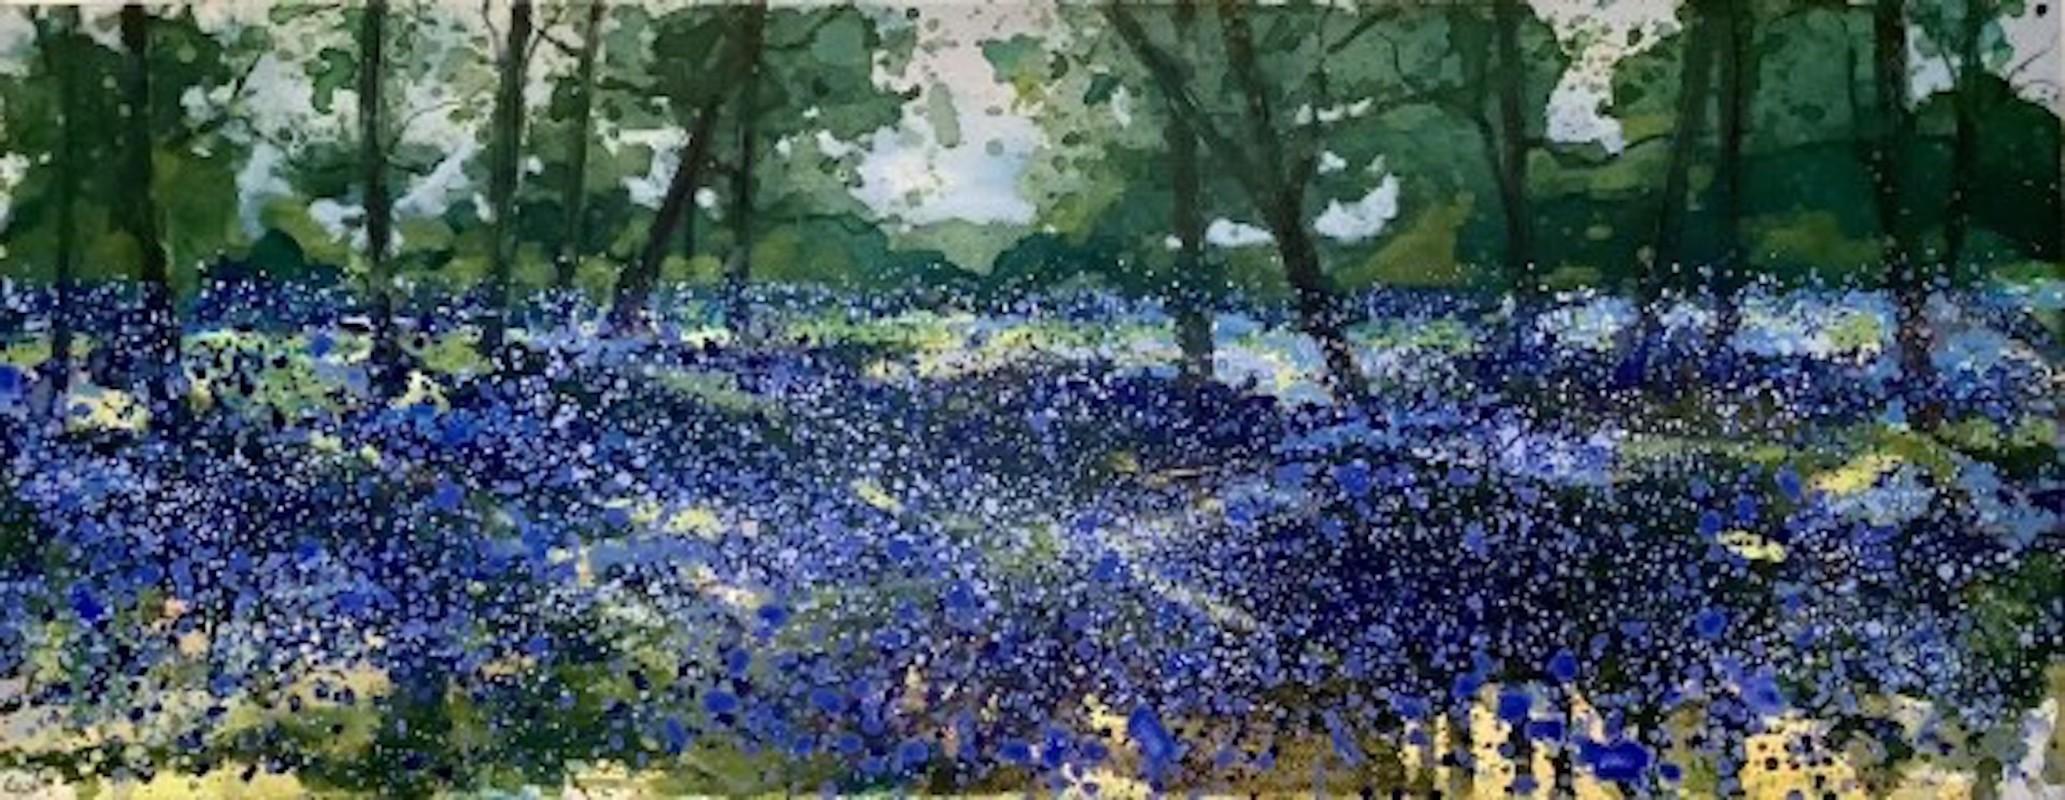 Adele Riley, Dusk in Bluebell Woods, Contemporary Landscape Art, Affordable Art